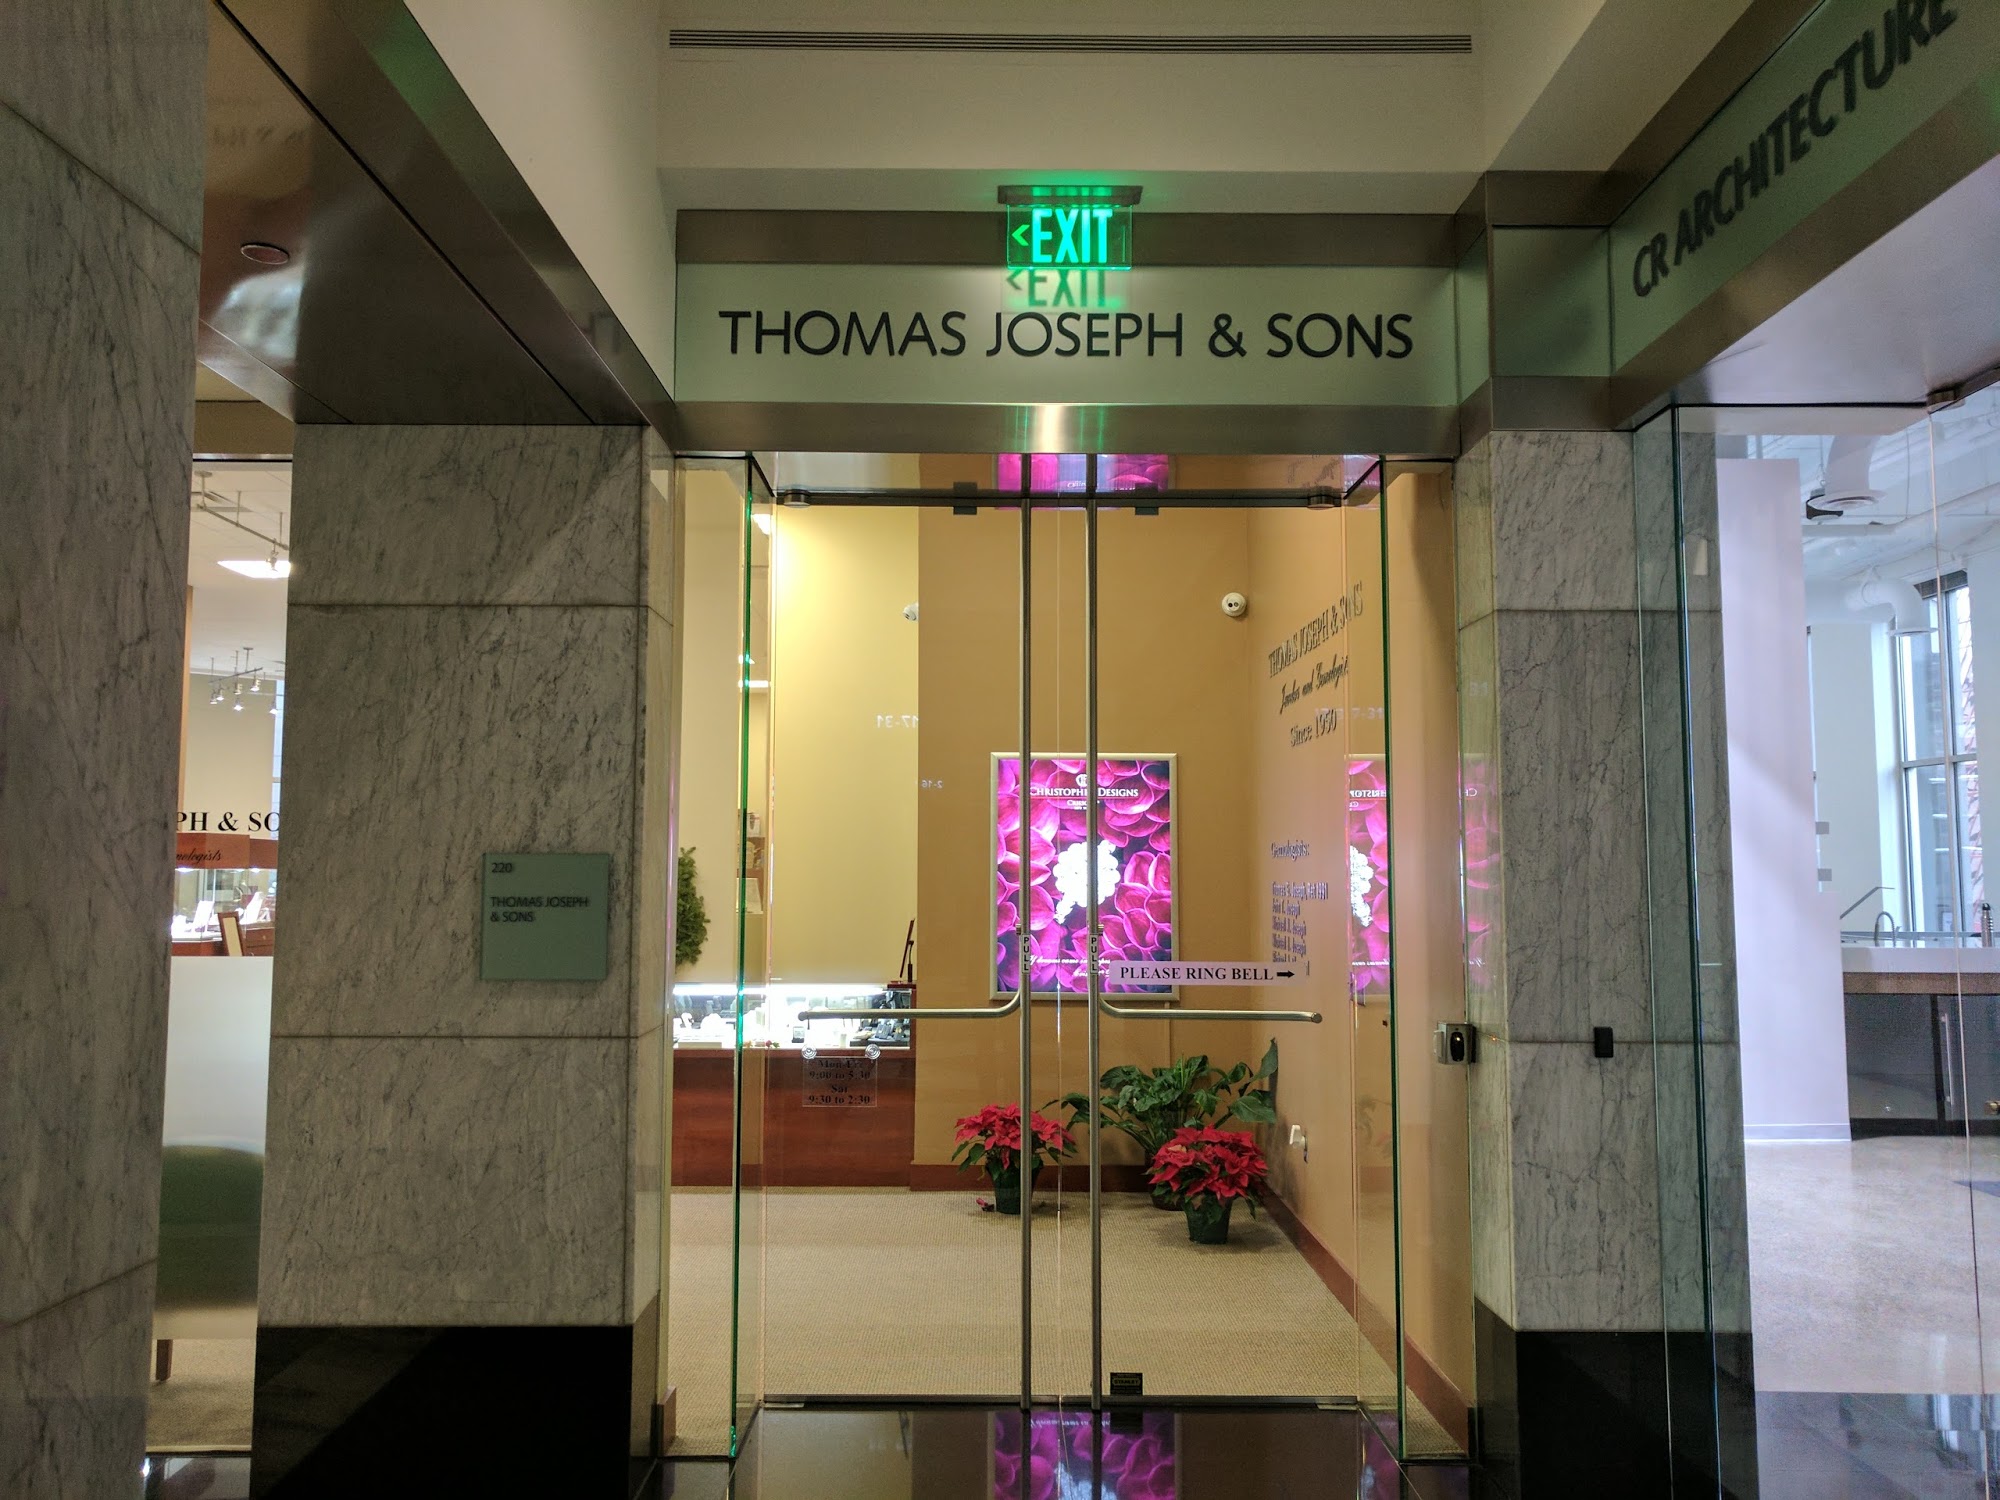 Thomas Joseph & Sons